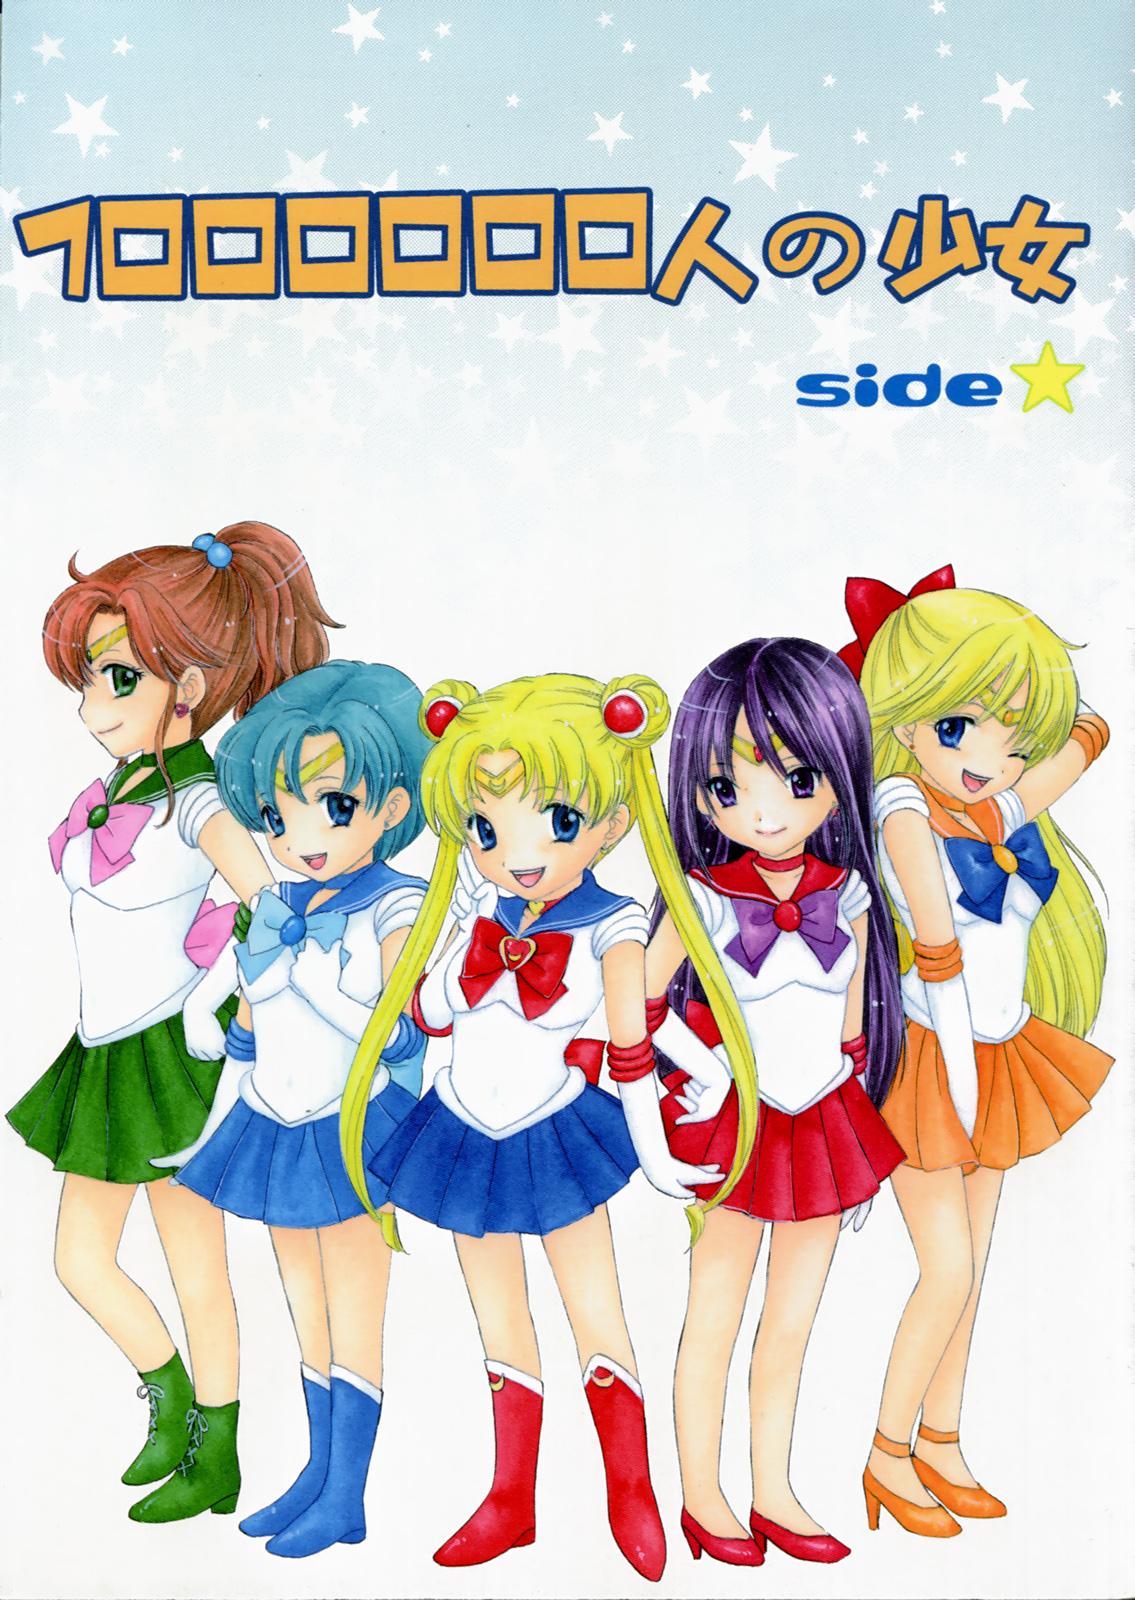 Car 1000000-nin no Shoujo side star - Sailor moon Chunky - Page 1